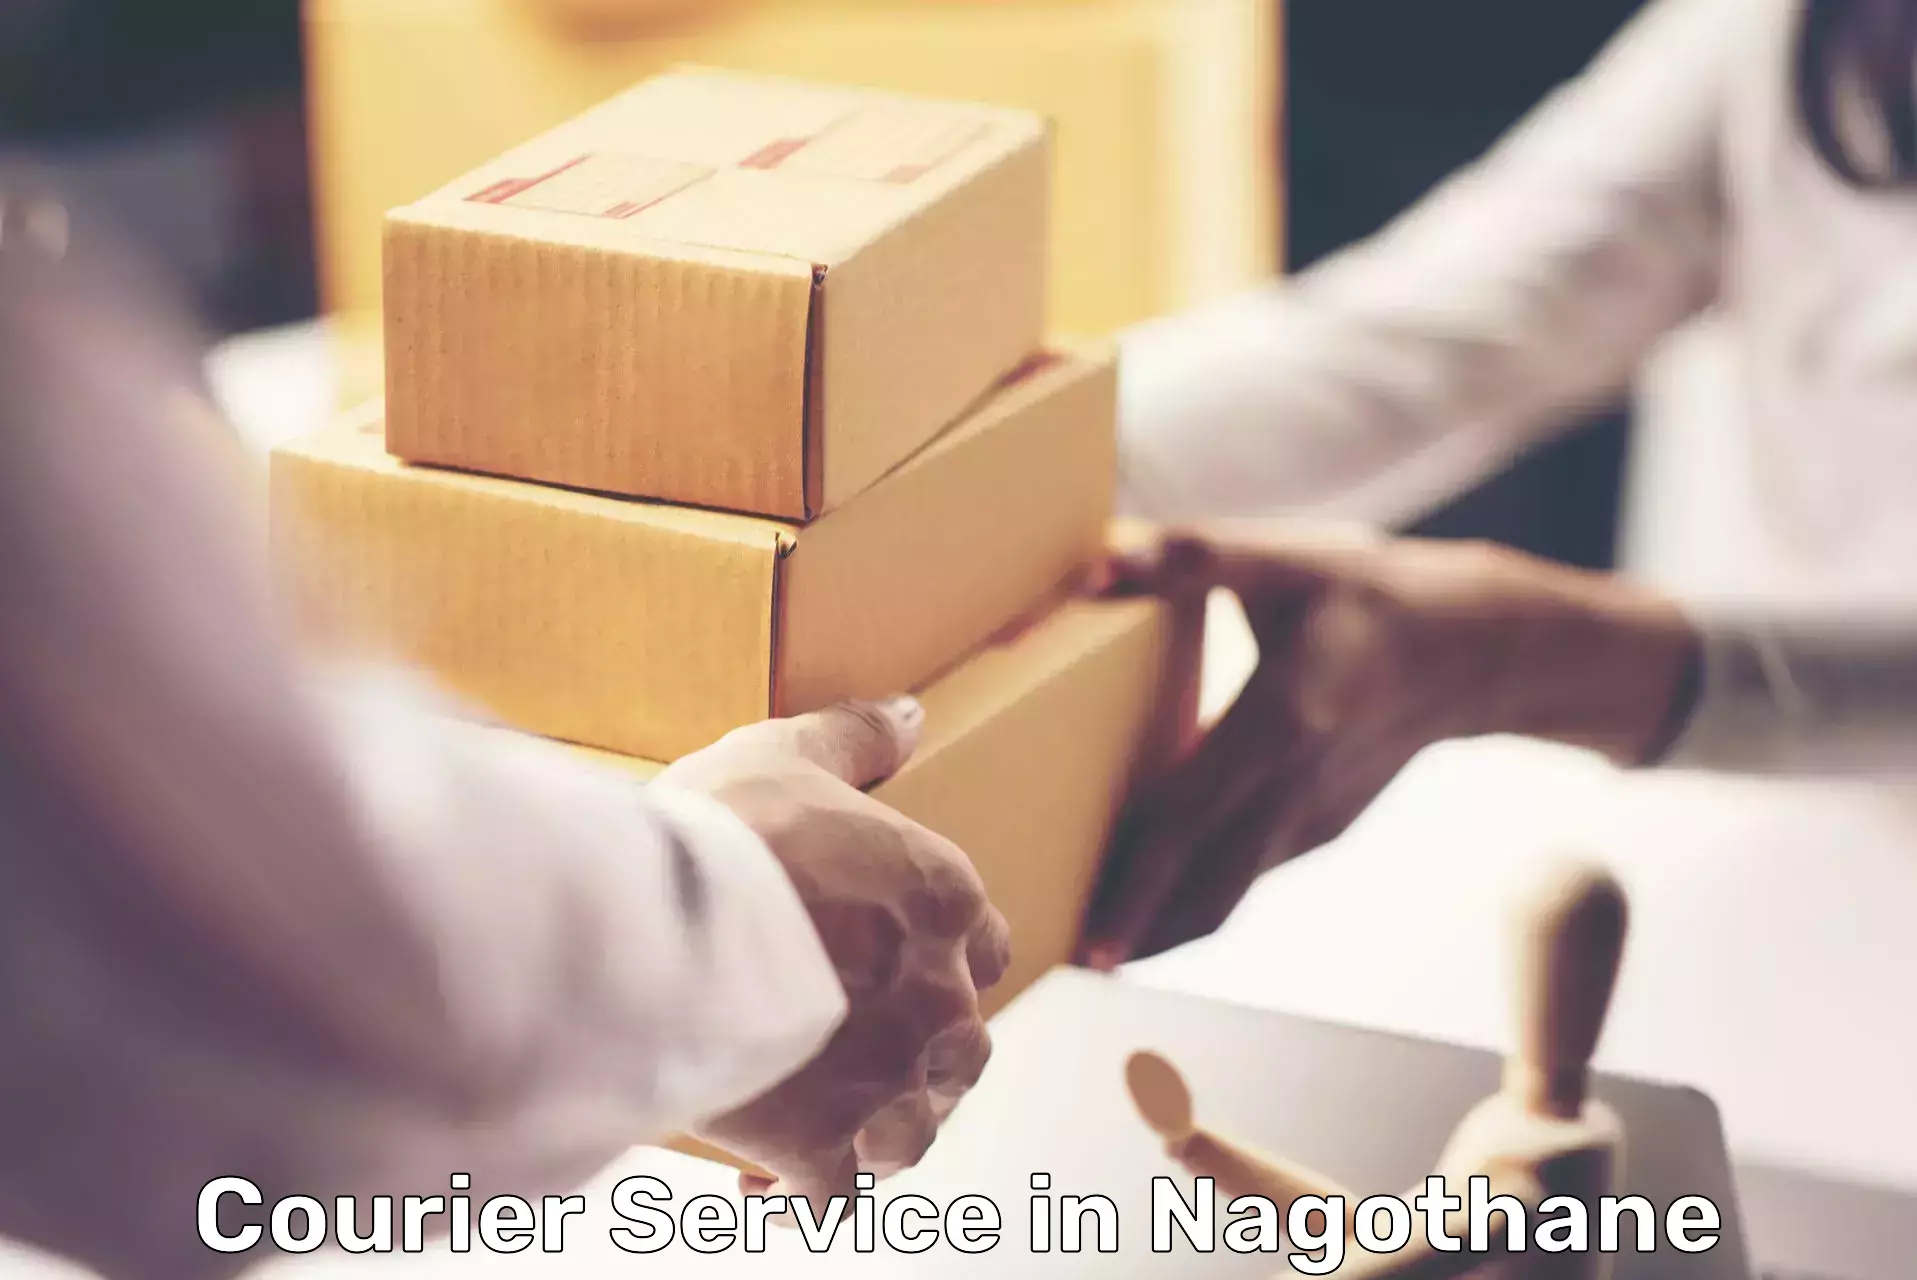 Efficient parcel tracking in Nagothane